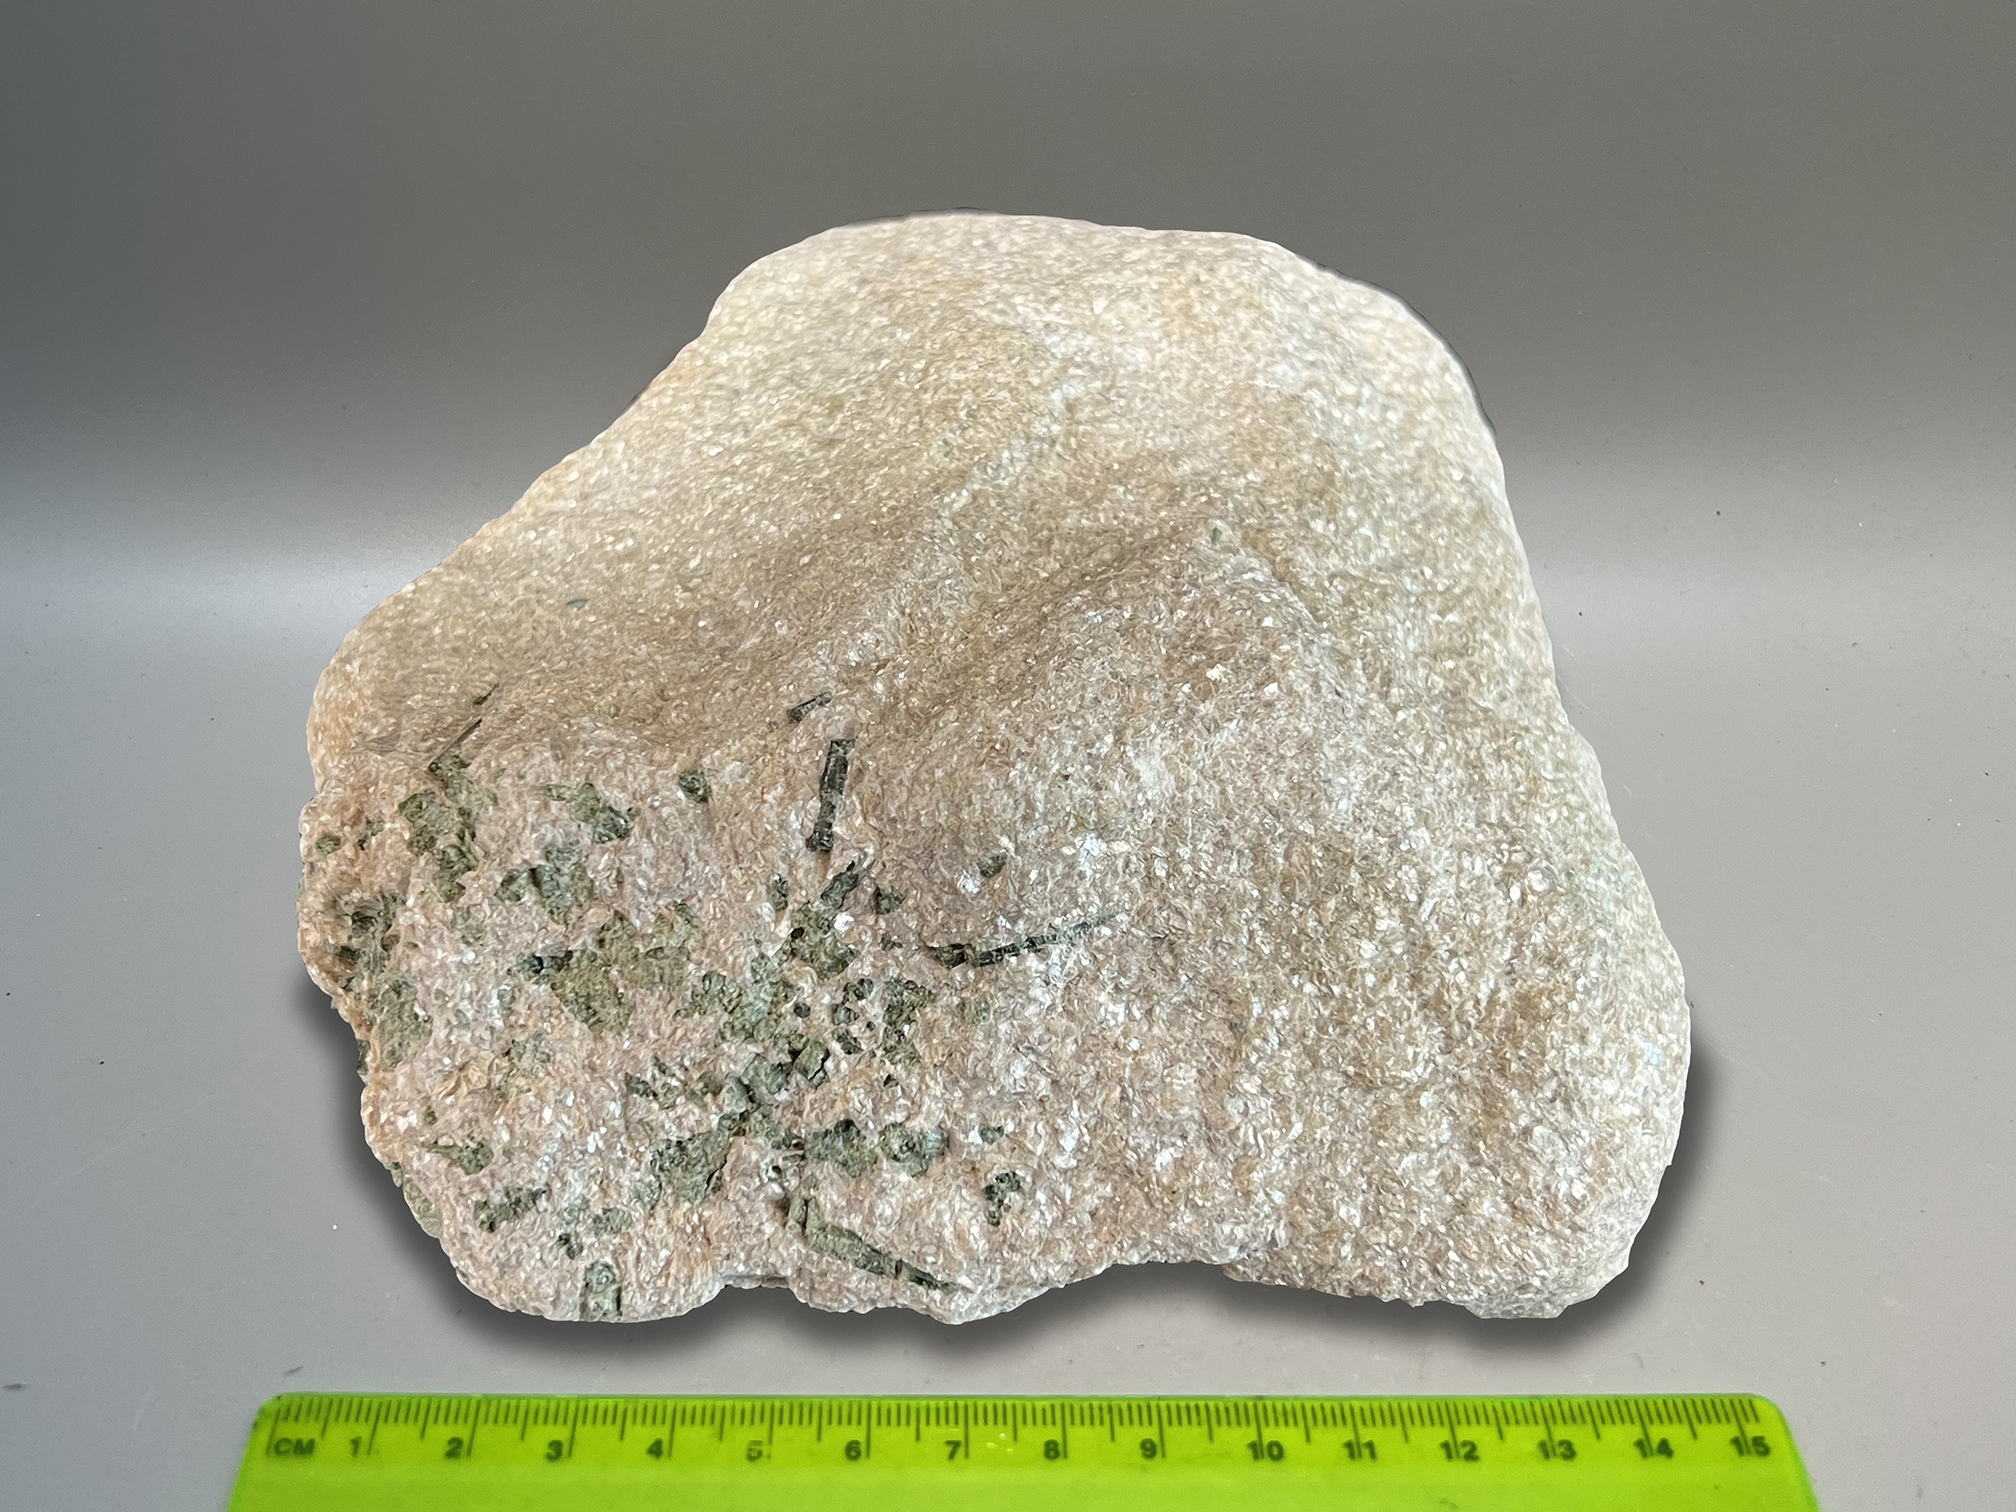 Marble tremolite